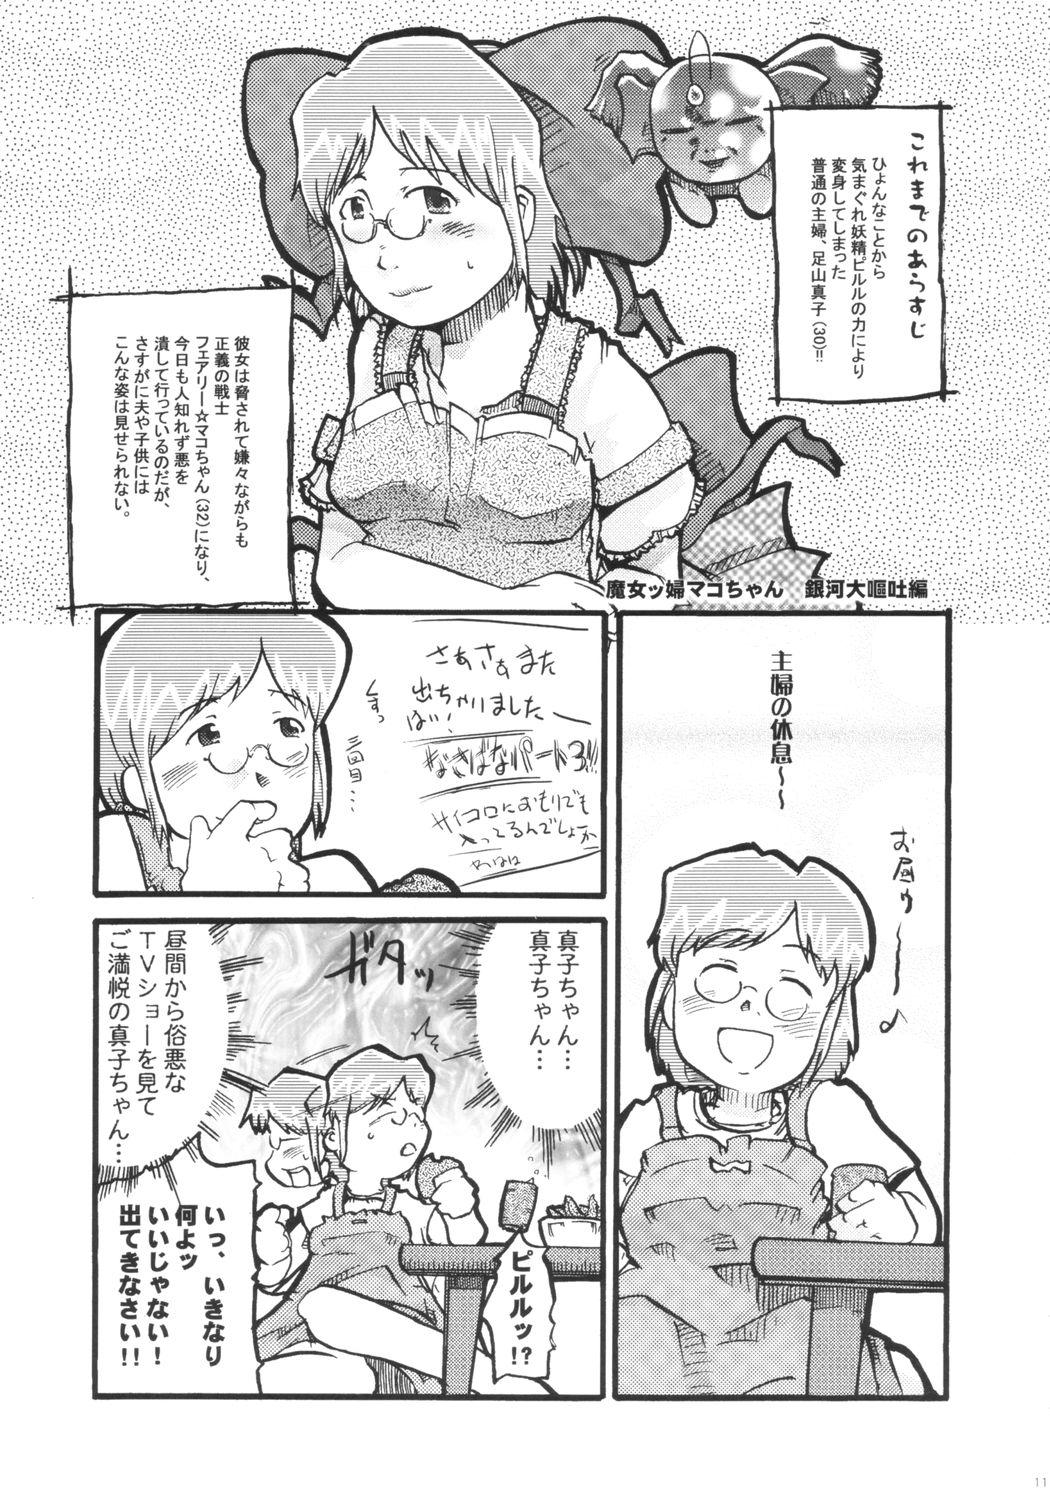 Blowing Aoi Sora Daisuki Onnanohito Motto Daisuki Caliente - Page 10